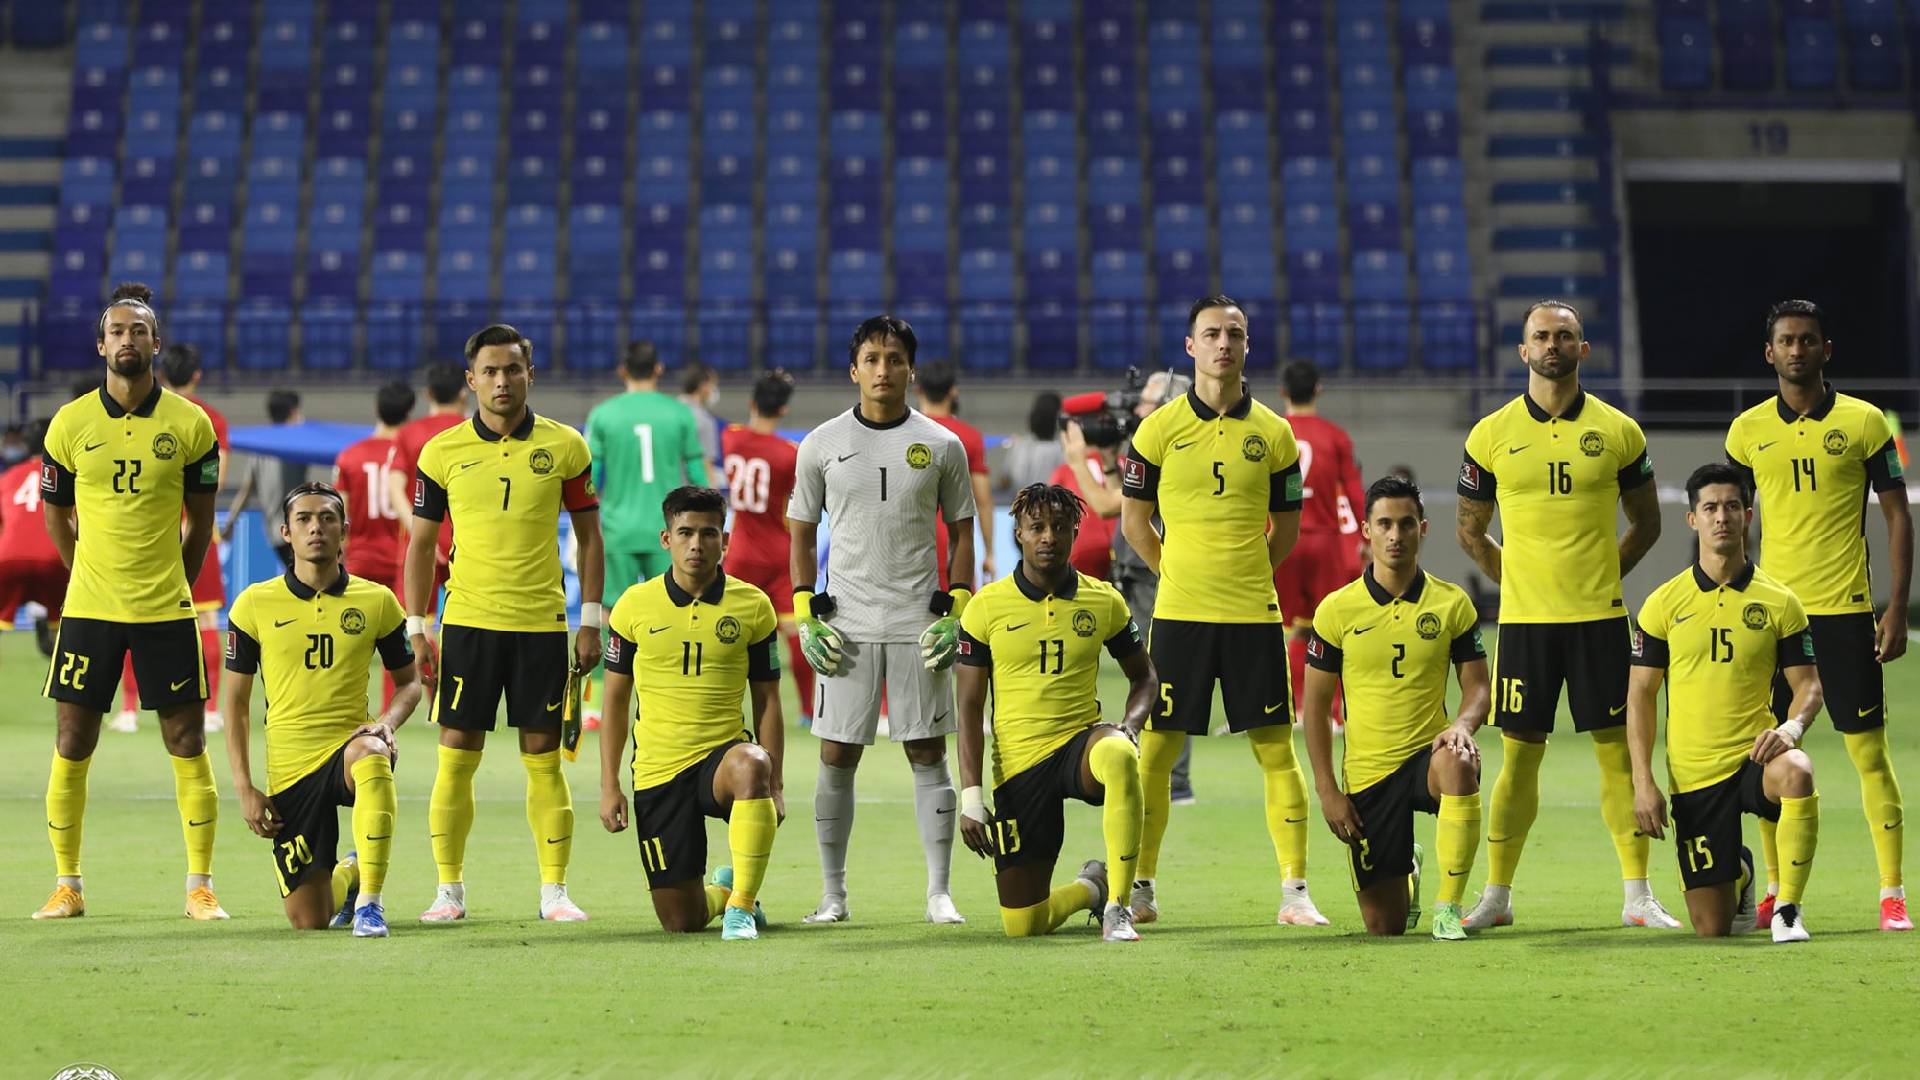 Harimau Malaya 2 Peluang Malaysia Ke Piala Asia Cerah